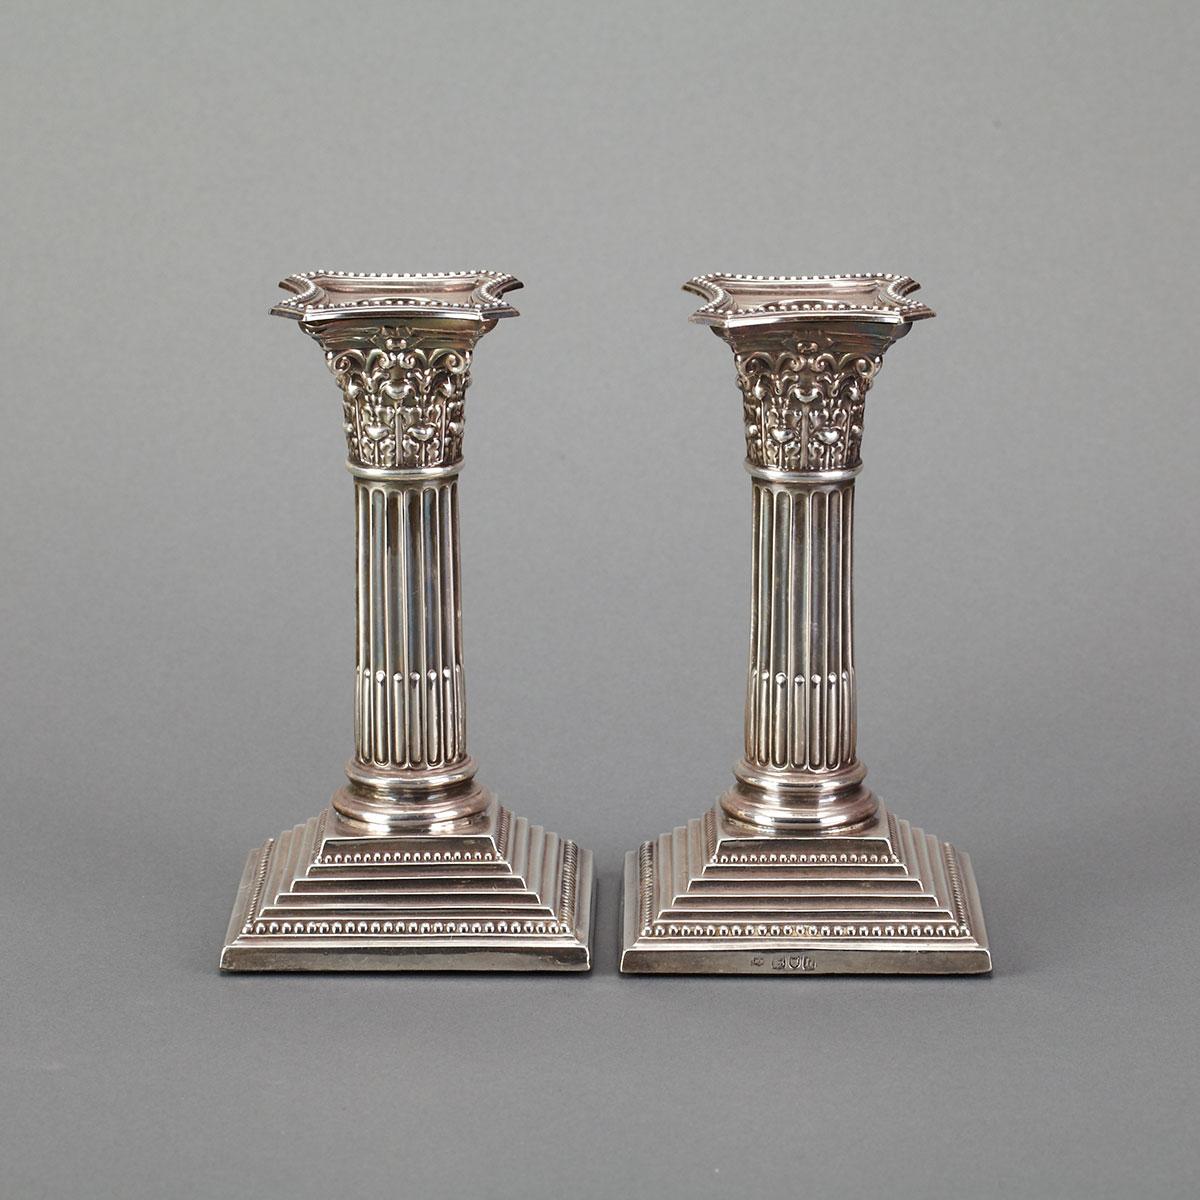 Pair of Edwardian Silver Corinthian Columnar Candlesticks, George Maudsley & David Fullerton, London, 1903